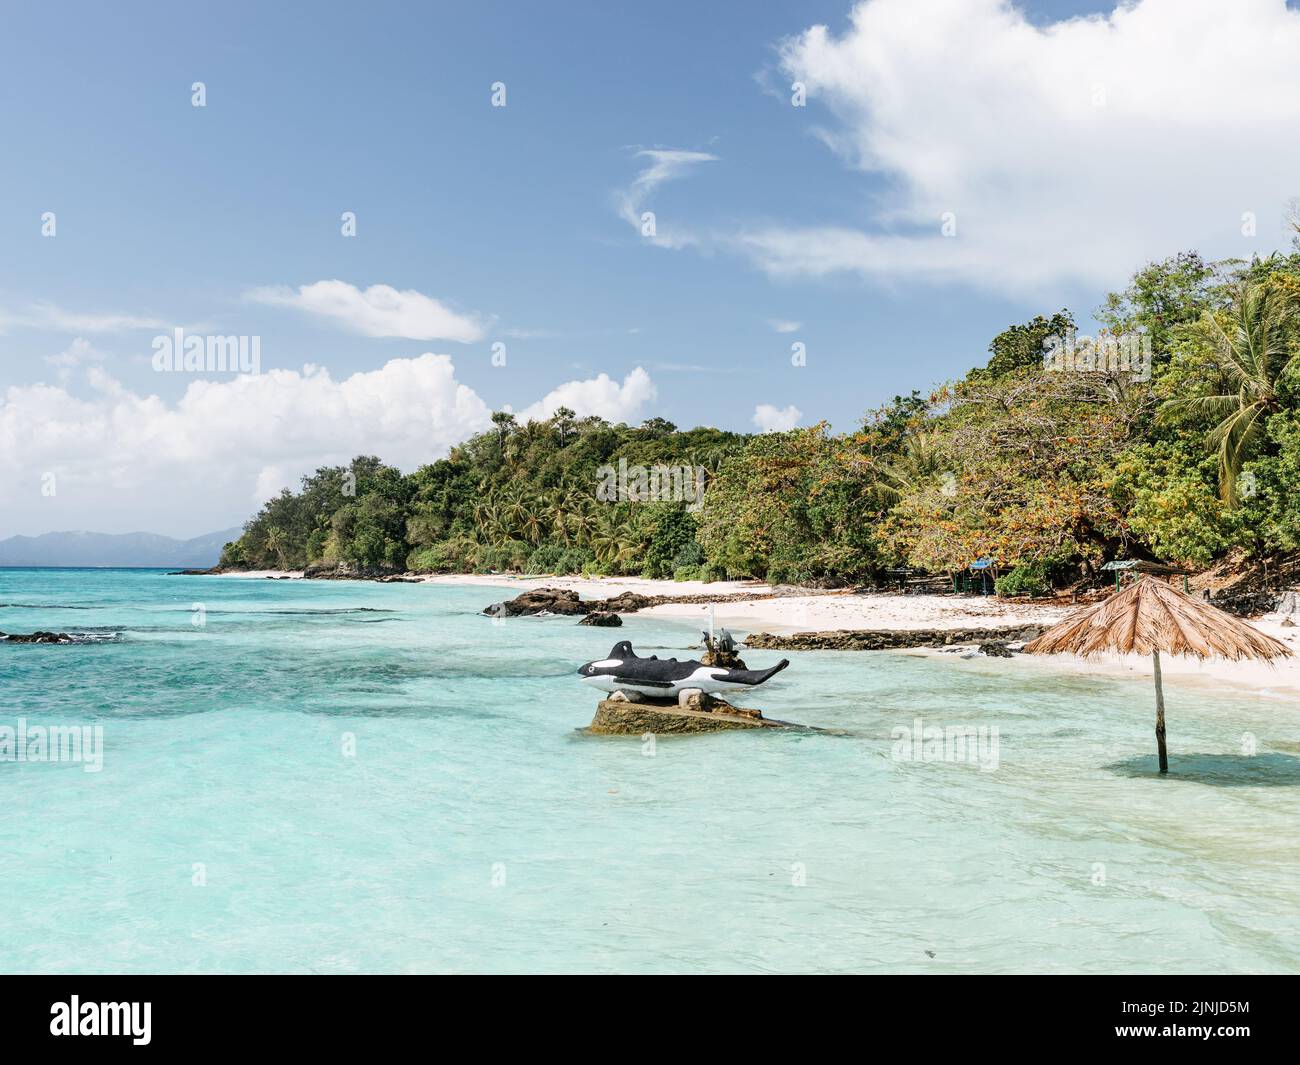 The sunny, paradise-like Romblon beach in the Philippines Stock Photo